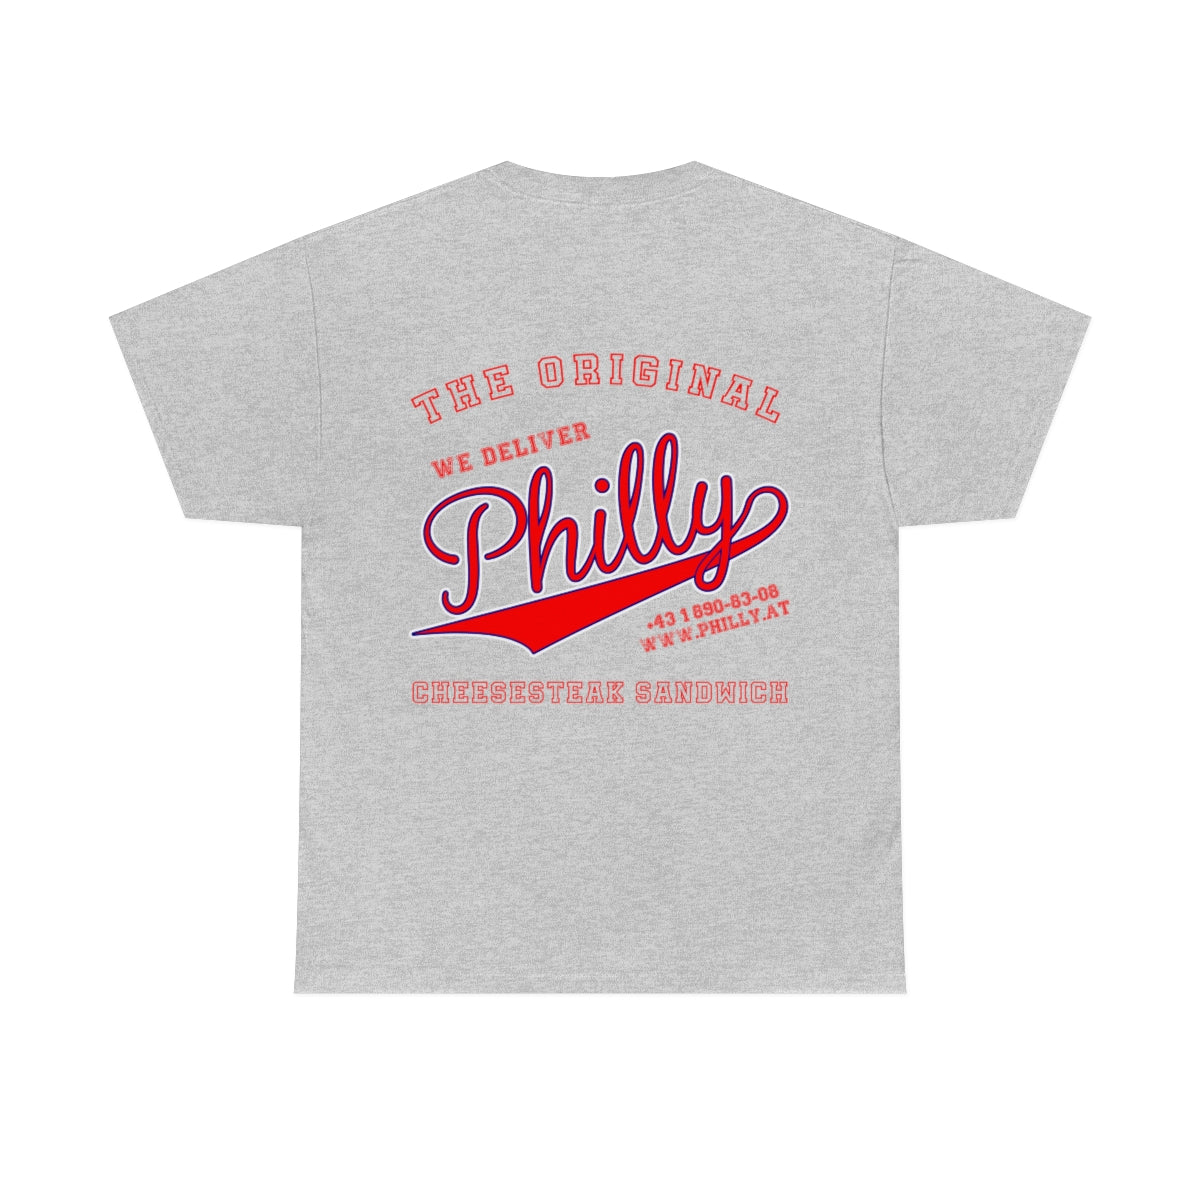 Philly Originals T-shirt